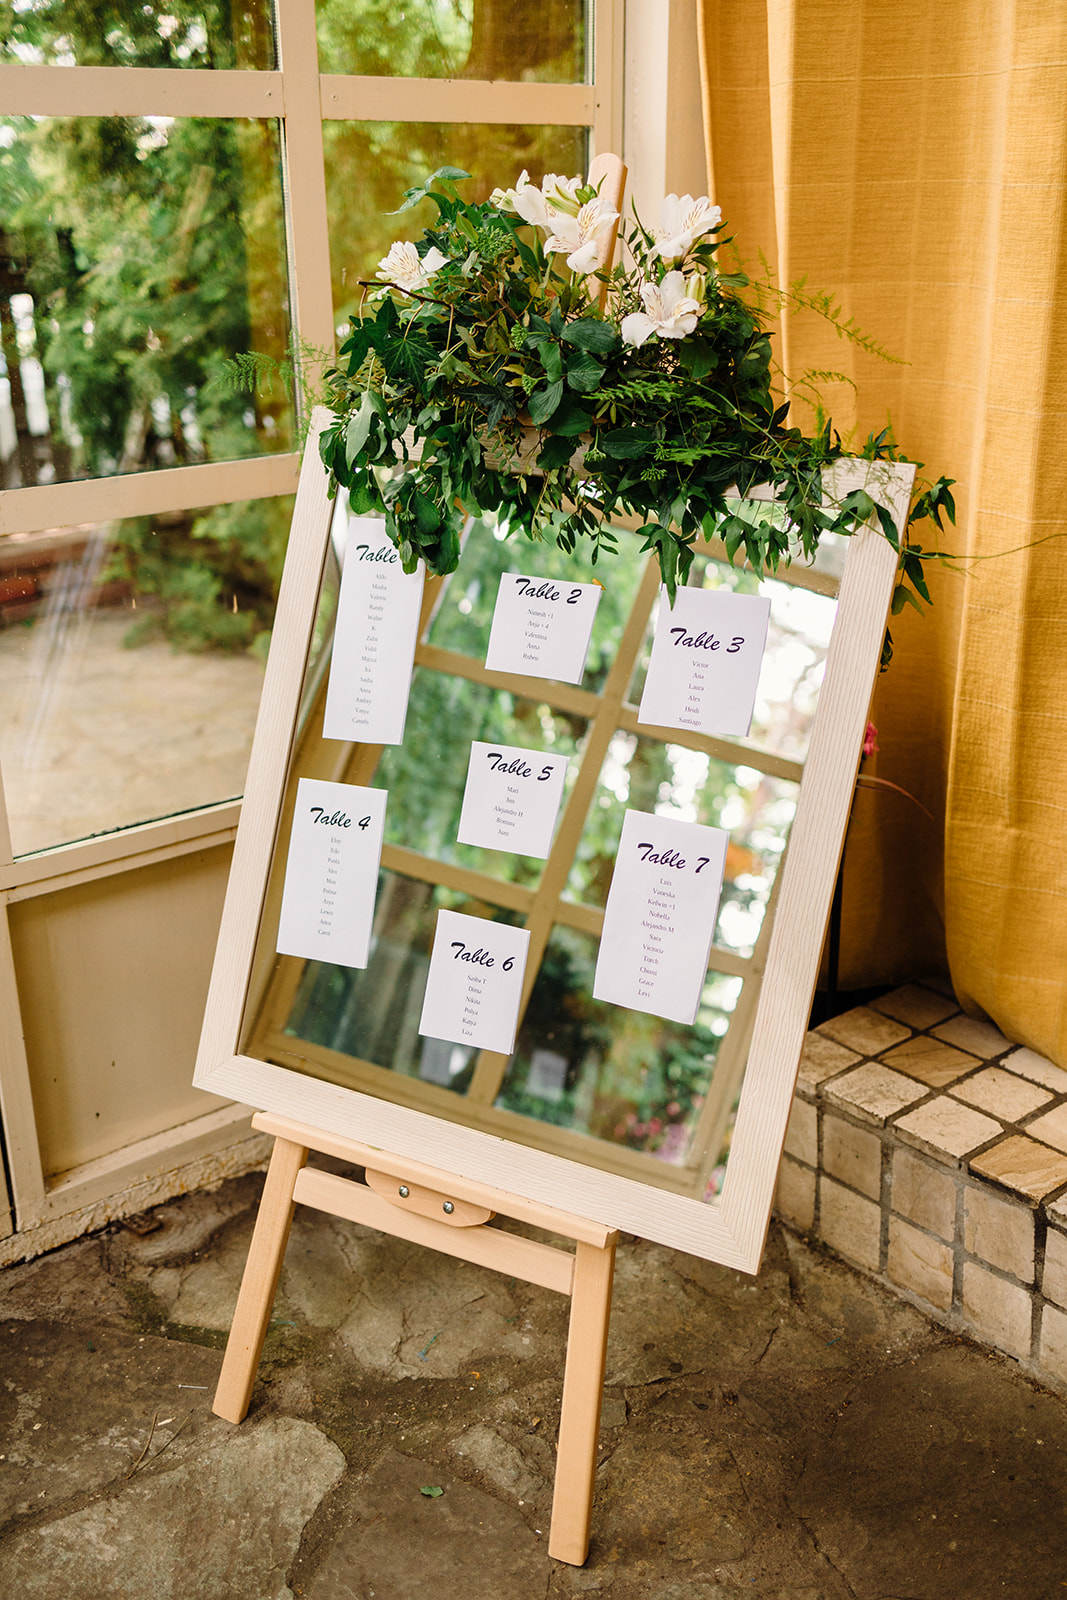 Ukrasi za stolove - Studio Art Garden - organizacija venčanja